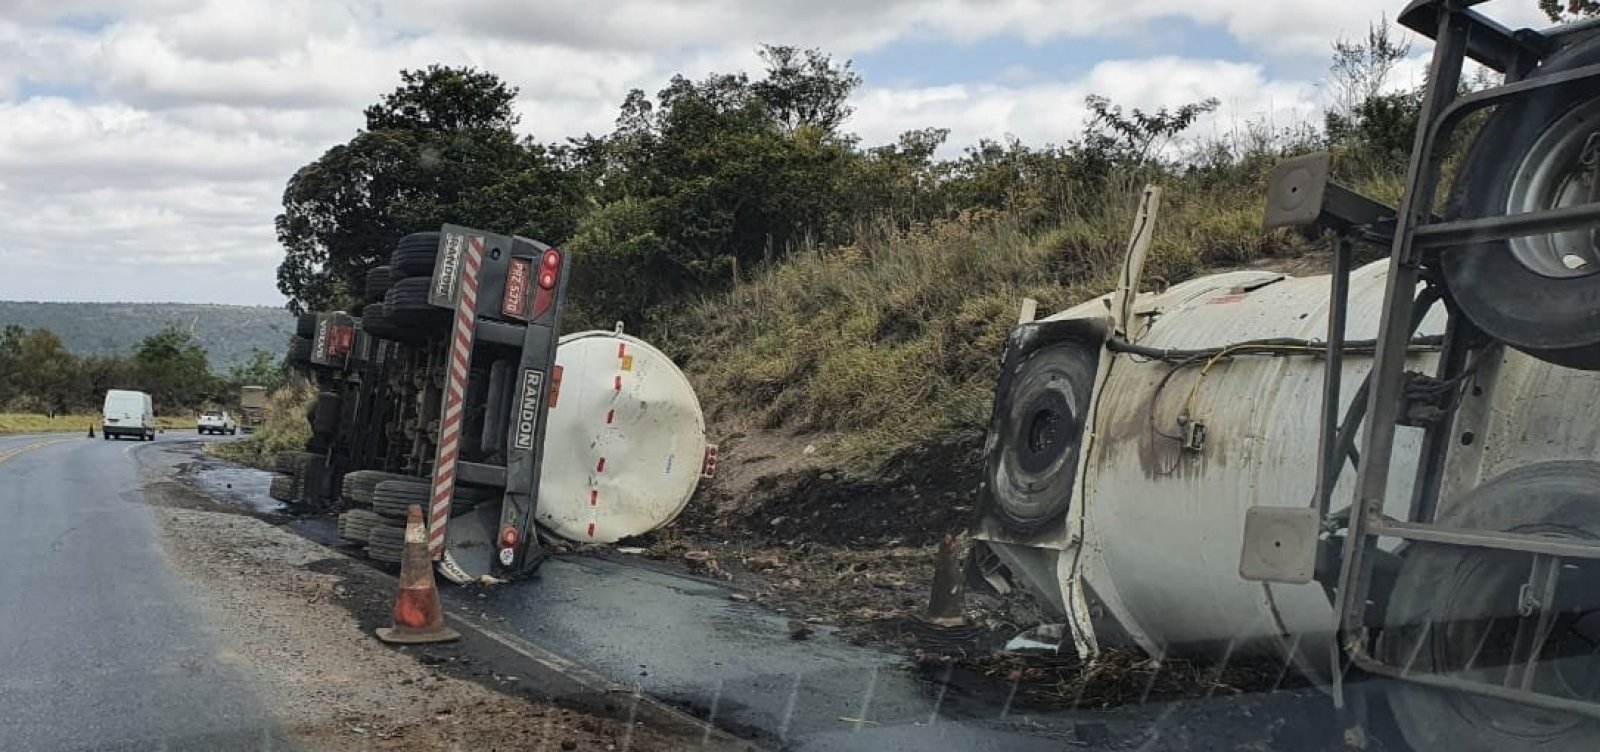 Caminhão tomba na serra do Pai Inácio e despeja diesel próximo a rio na Chapada Diamantina; veja vídeo